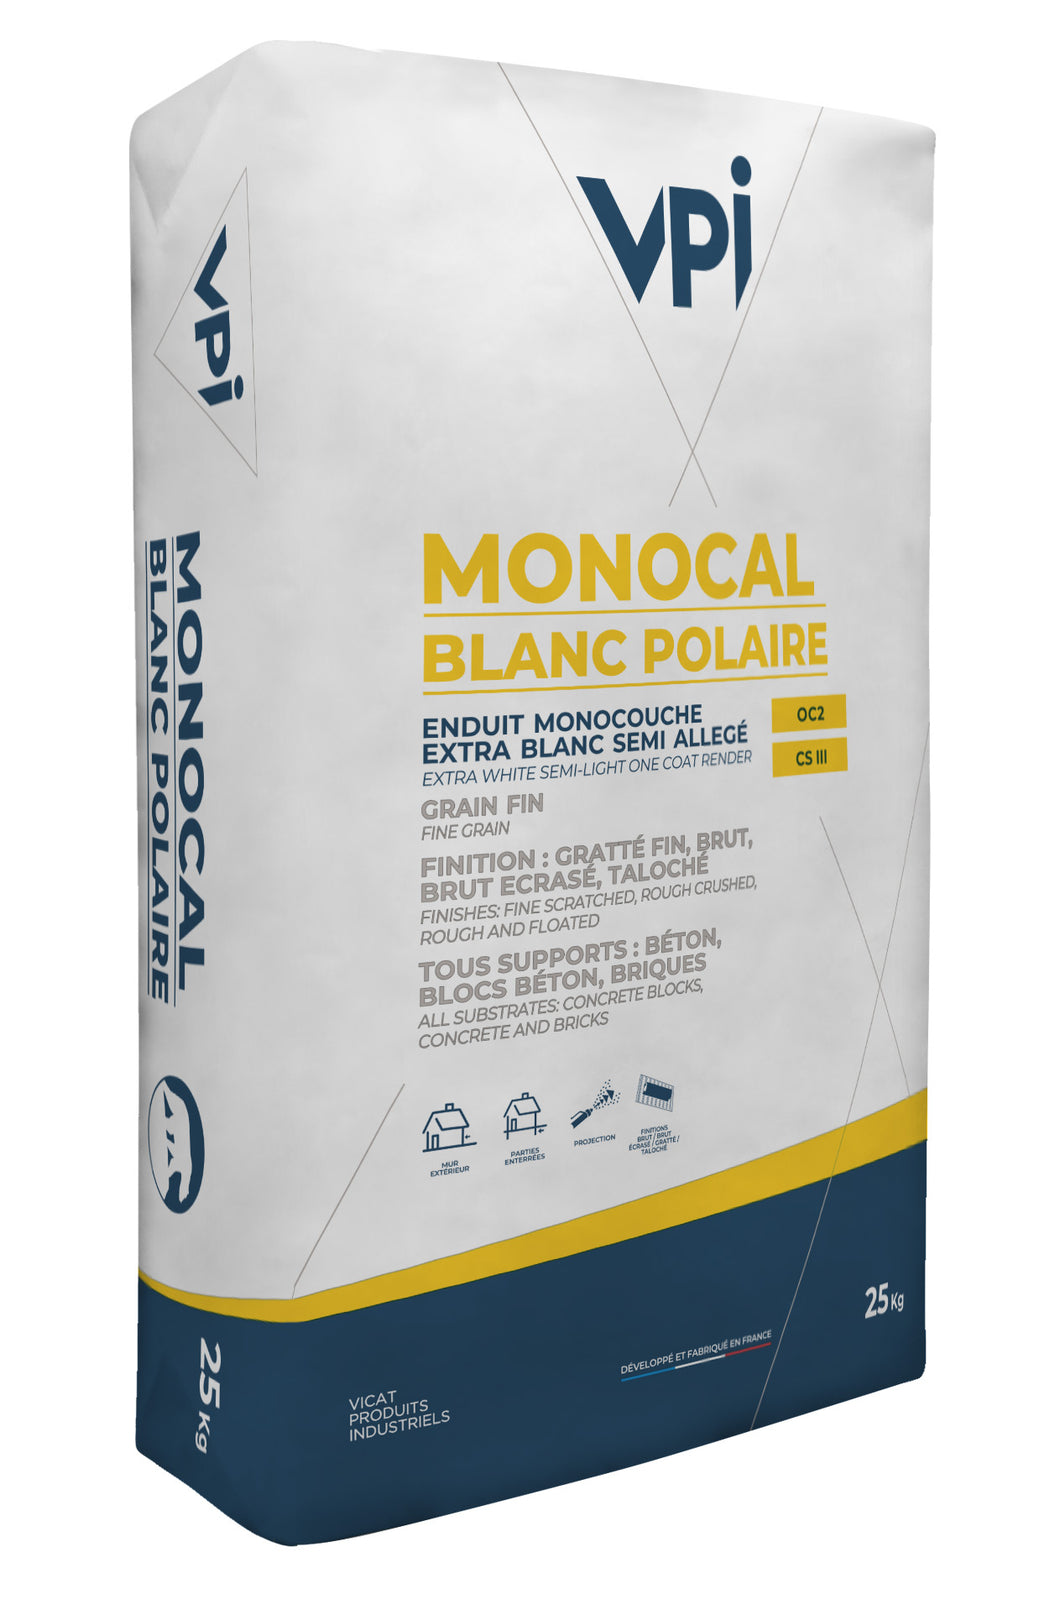 VPI MonoCal Blanc Polaire